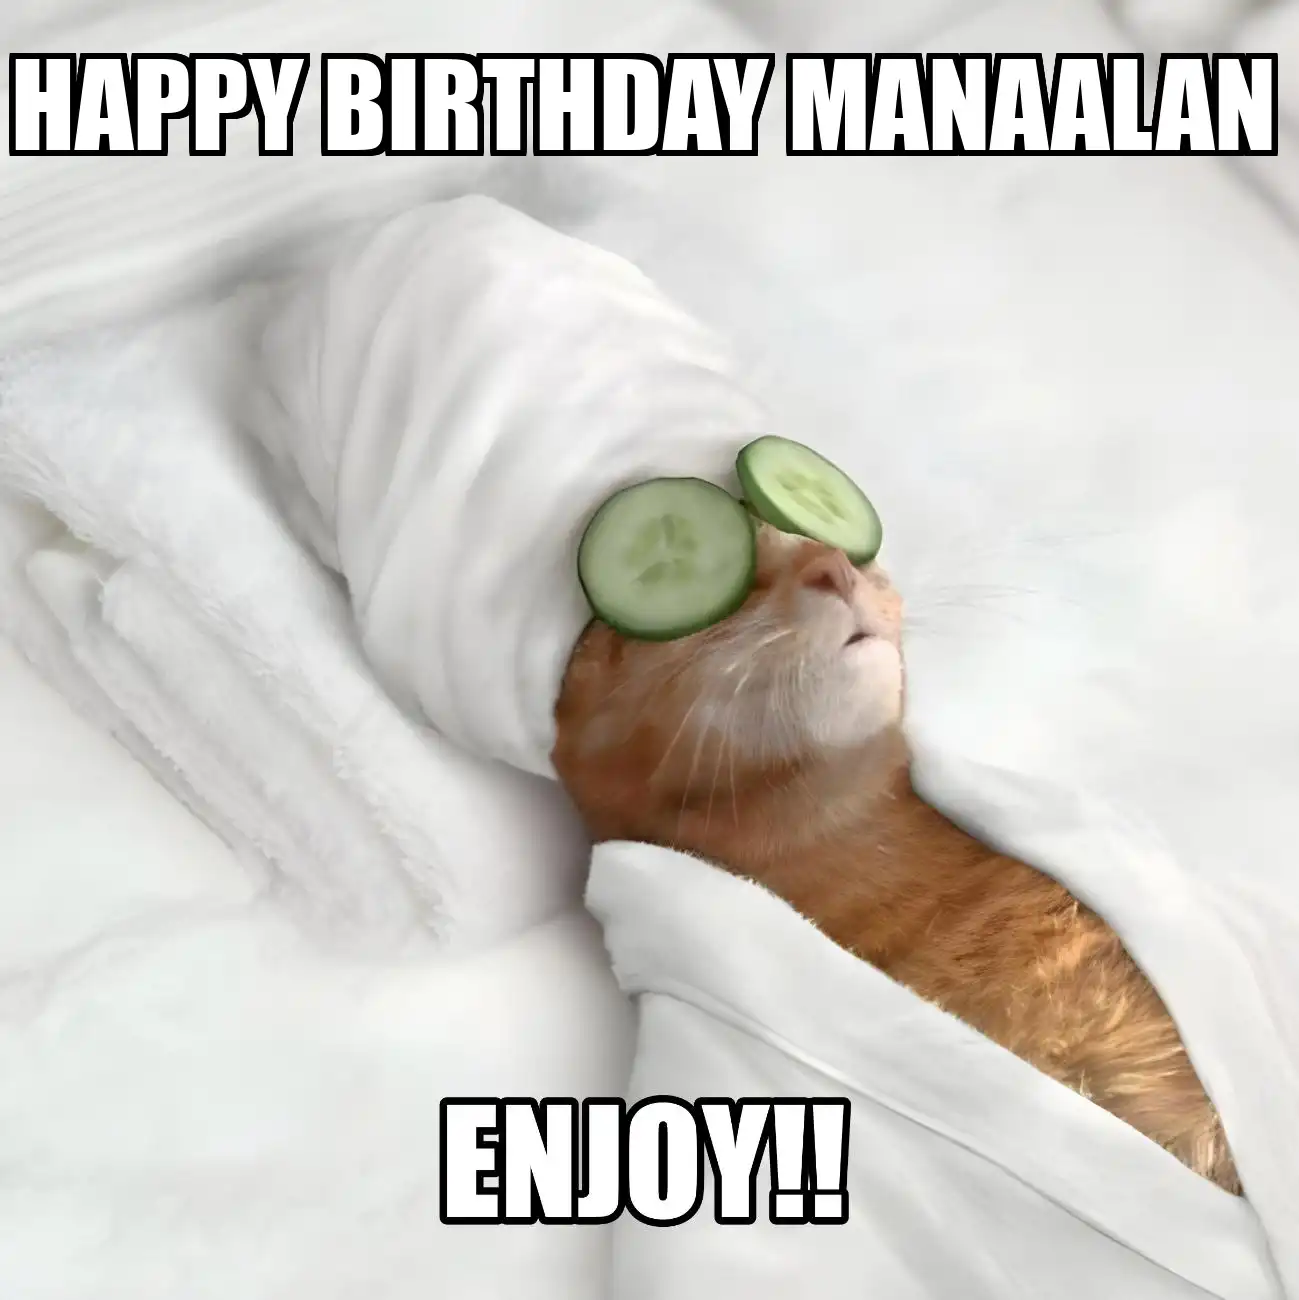 Happy Birthday Manaalan Enjoy Cat Meme